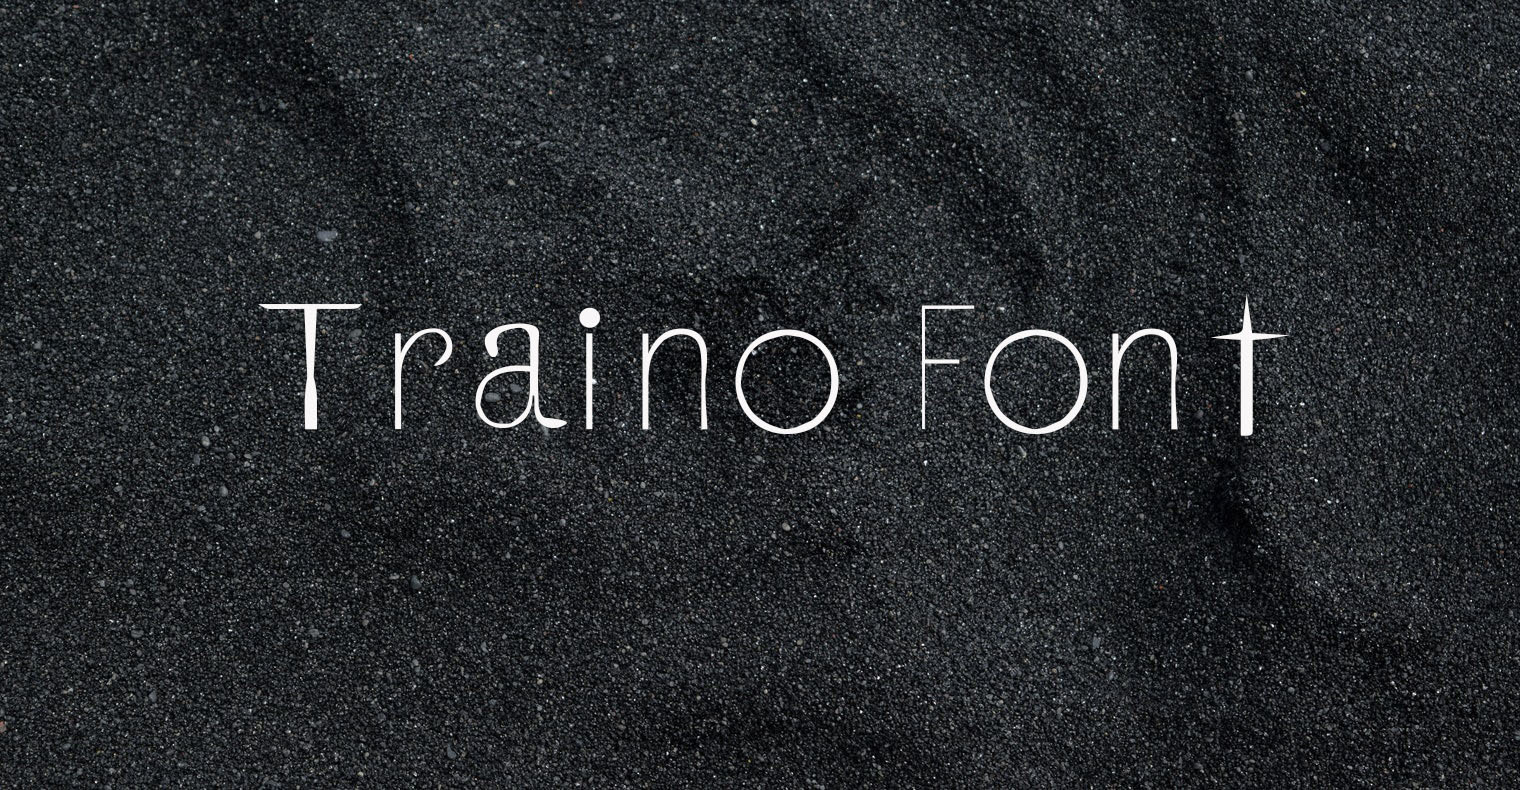 Traino Font